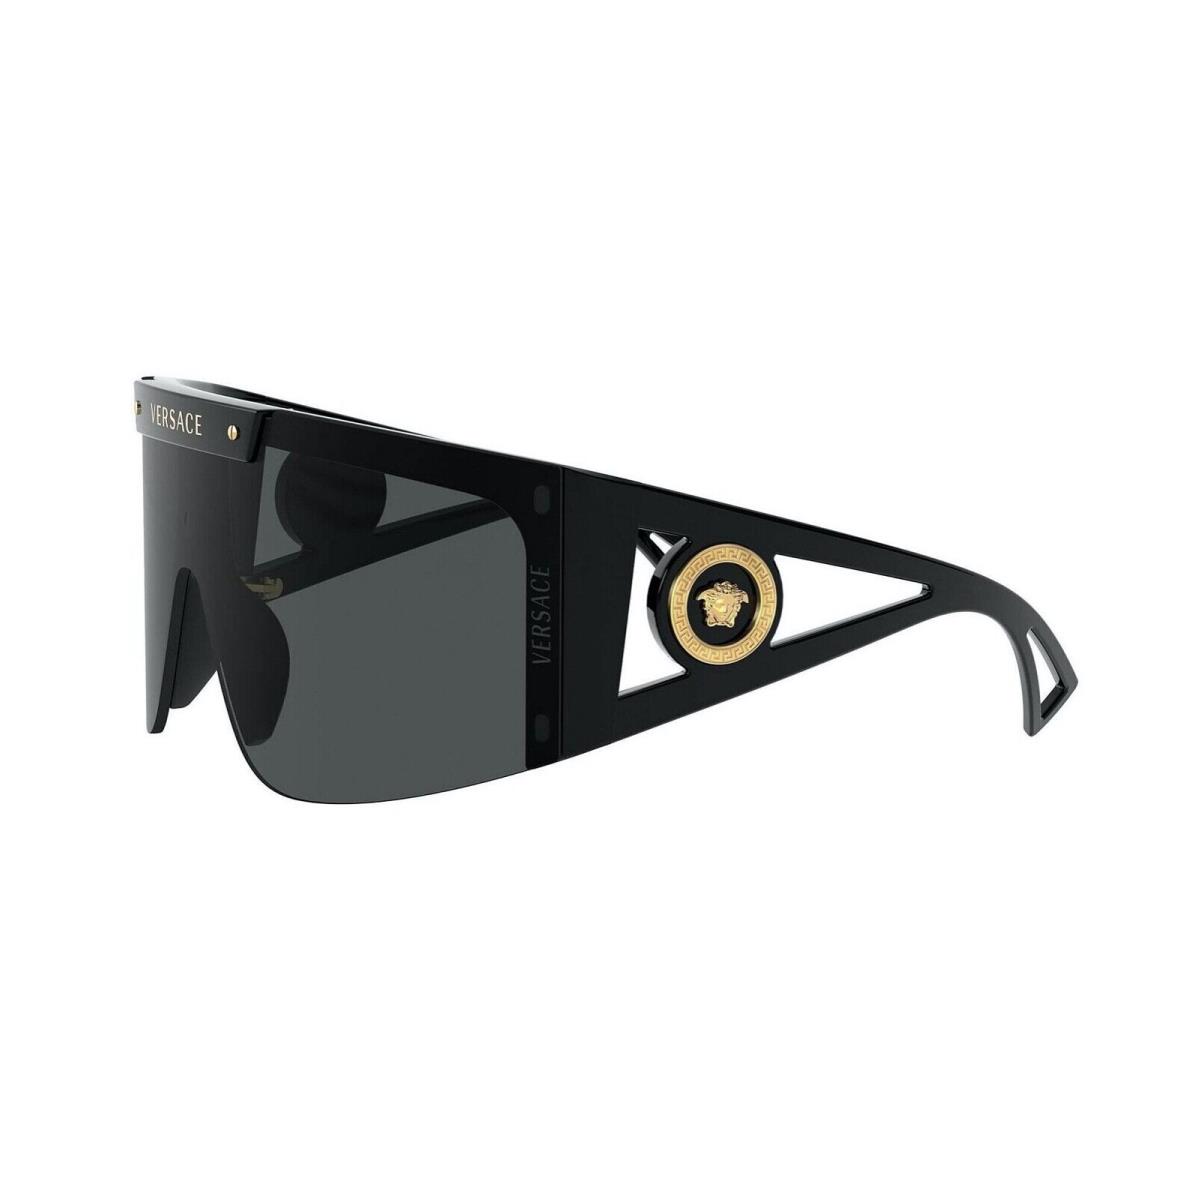 Versace sunglasses  - Black Frame, Black Lens